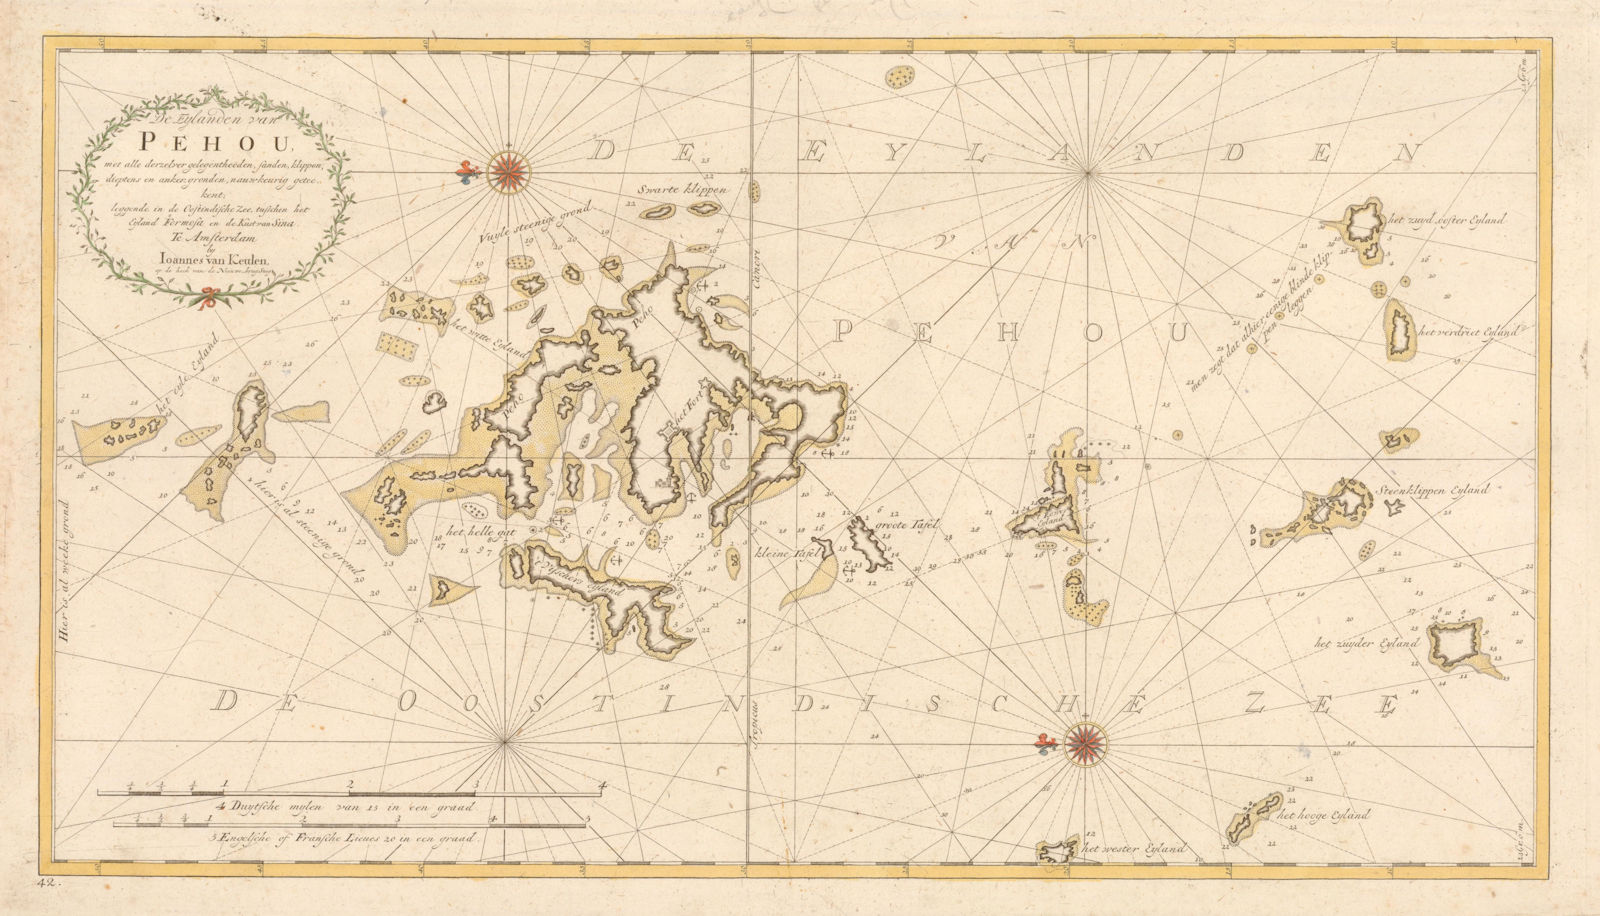 'De Eylanden van Pehou' by VAN KEULEN. Penghu Islands Taiwan. VOC chart 1753 map